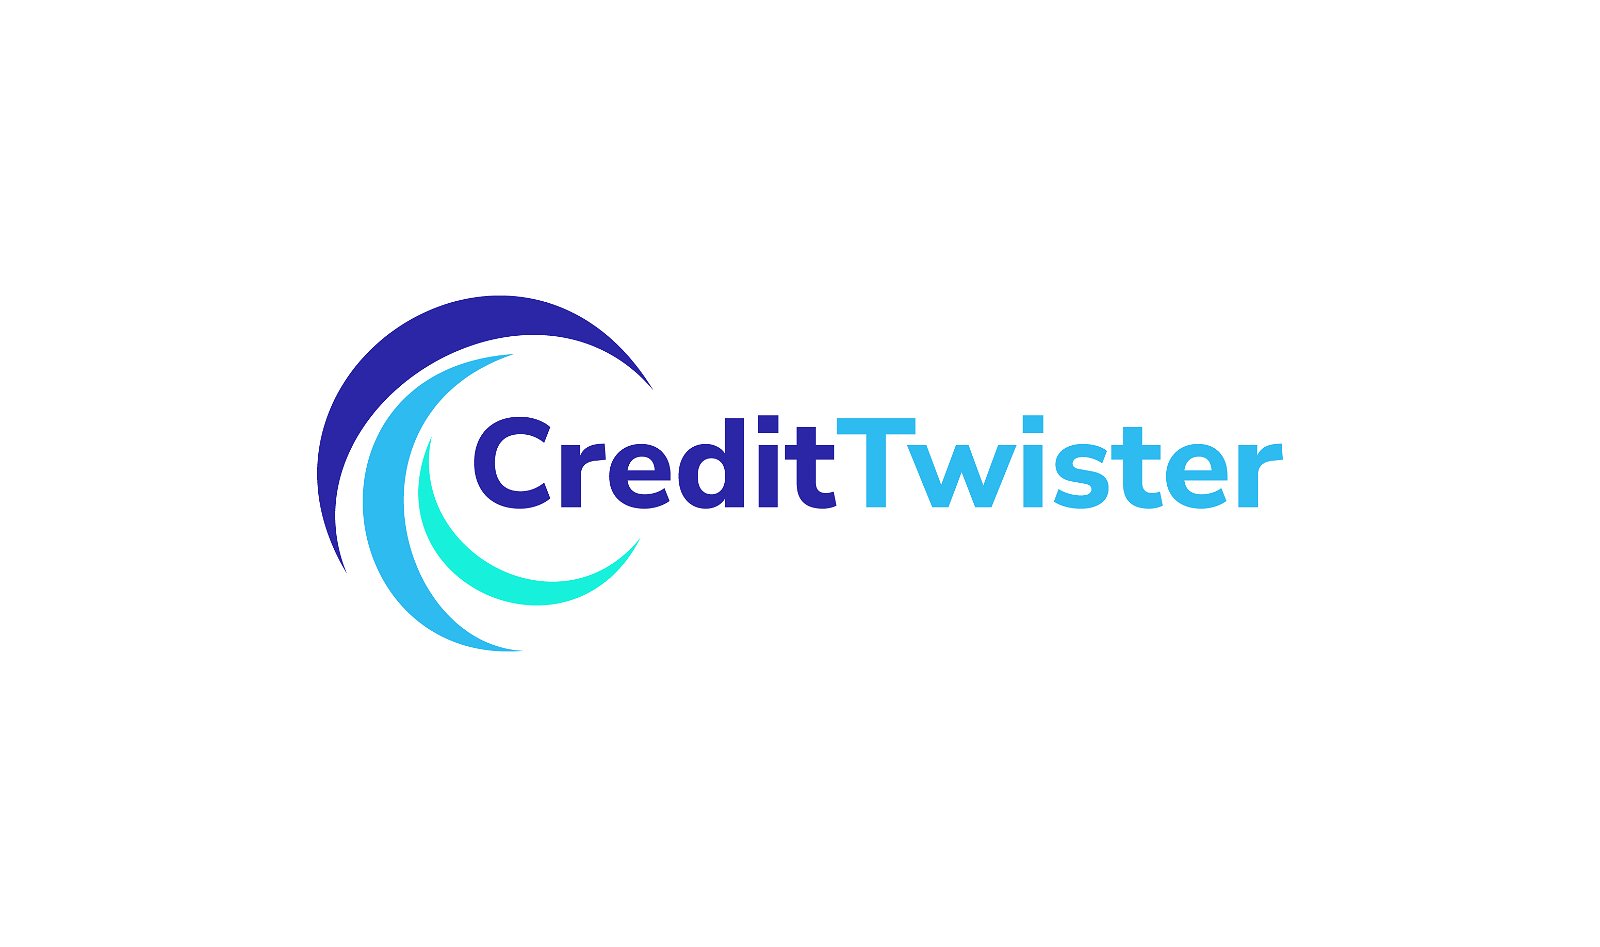 CreditTwister.com - Creative brandable domain for sale